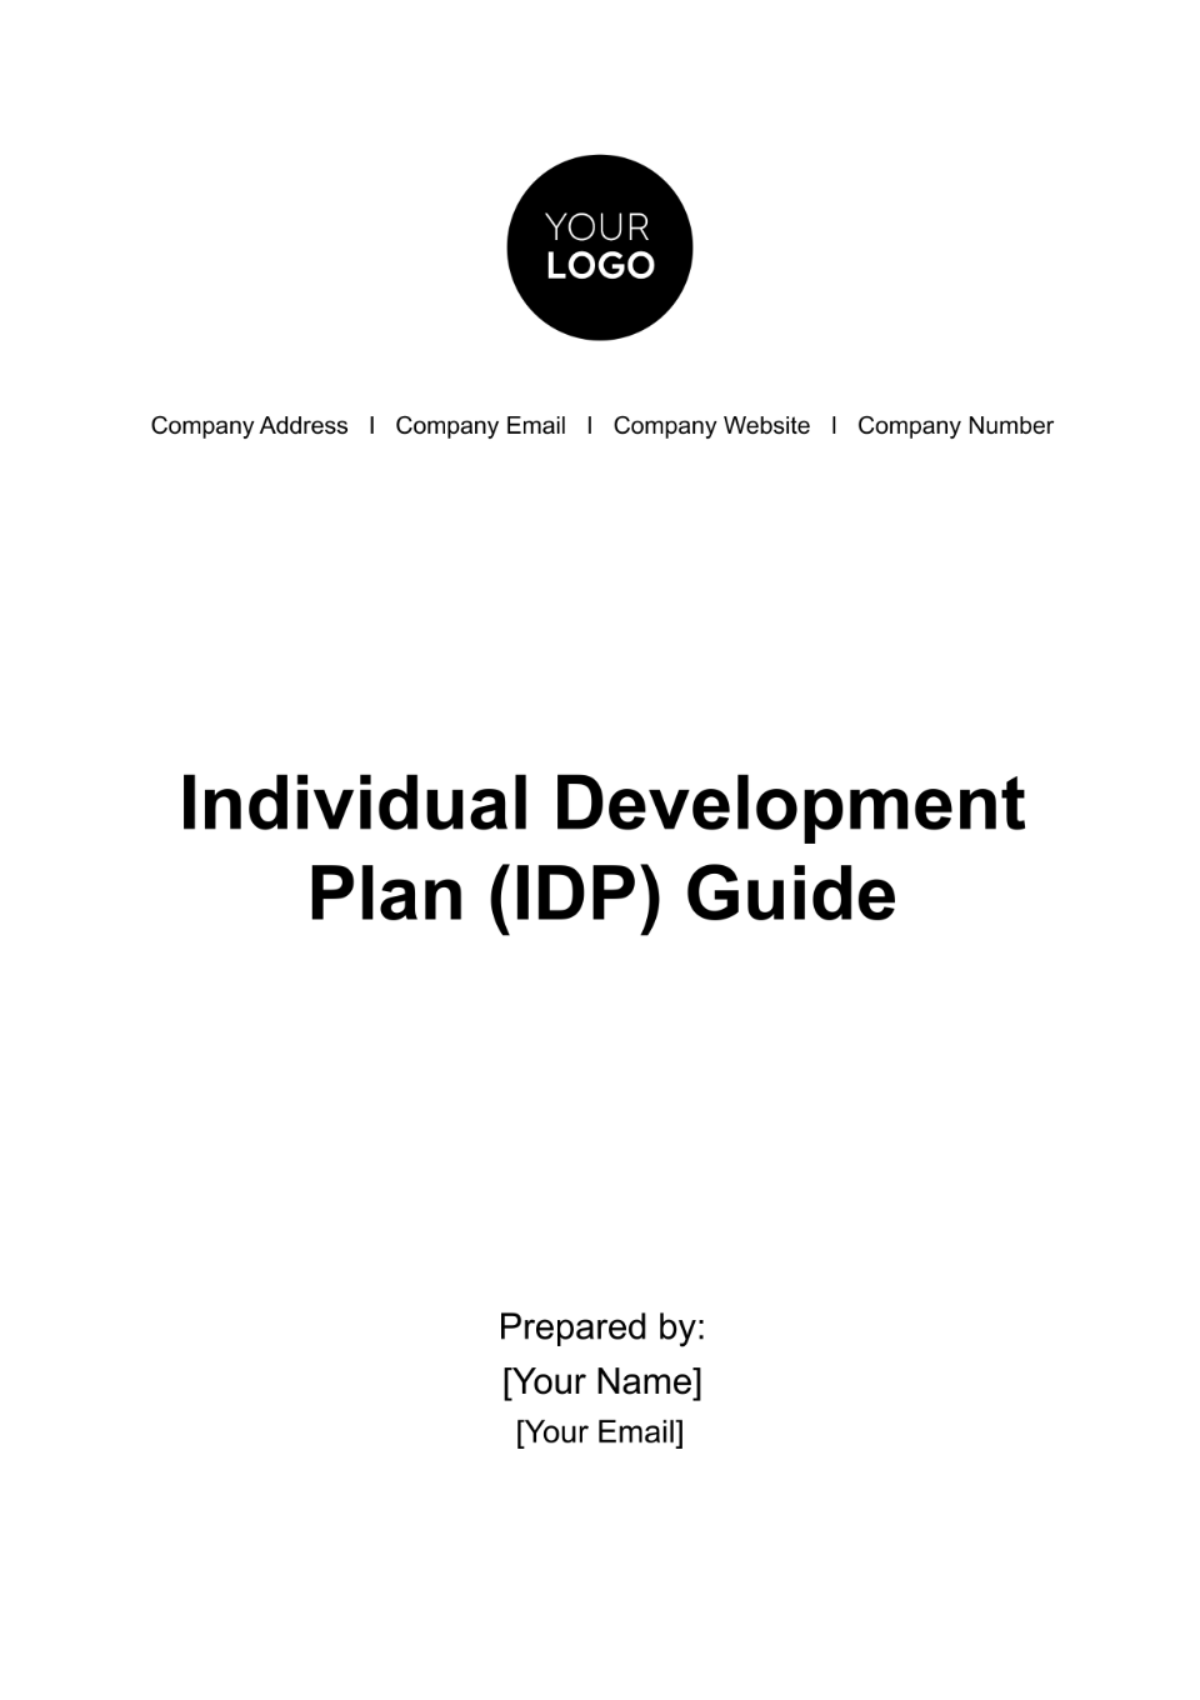 Individual Development Plan (IDP) Guide HR Template